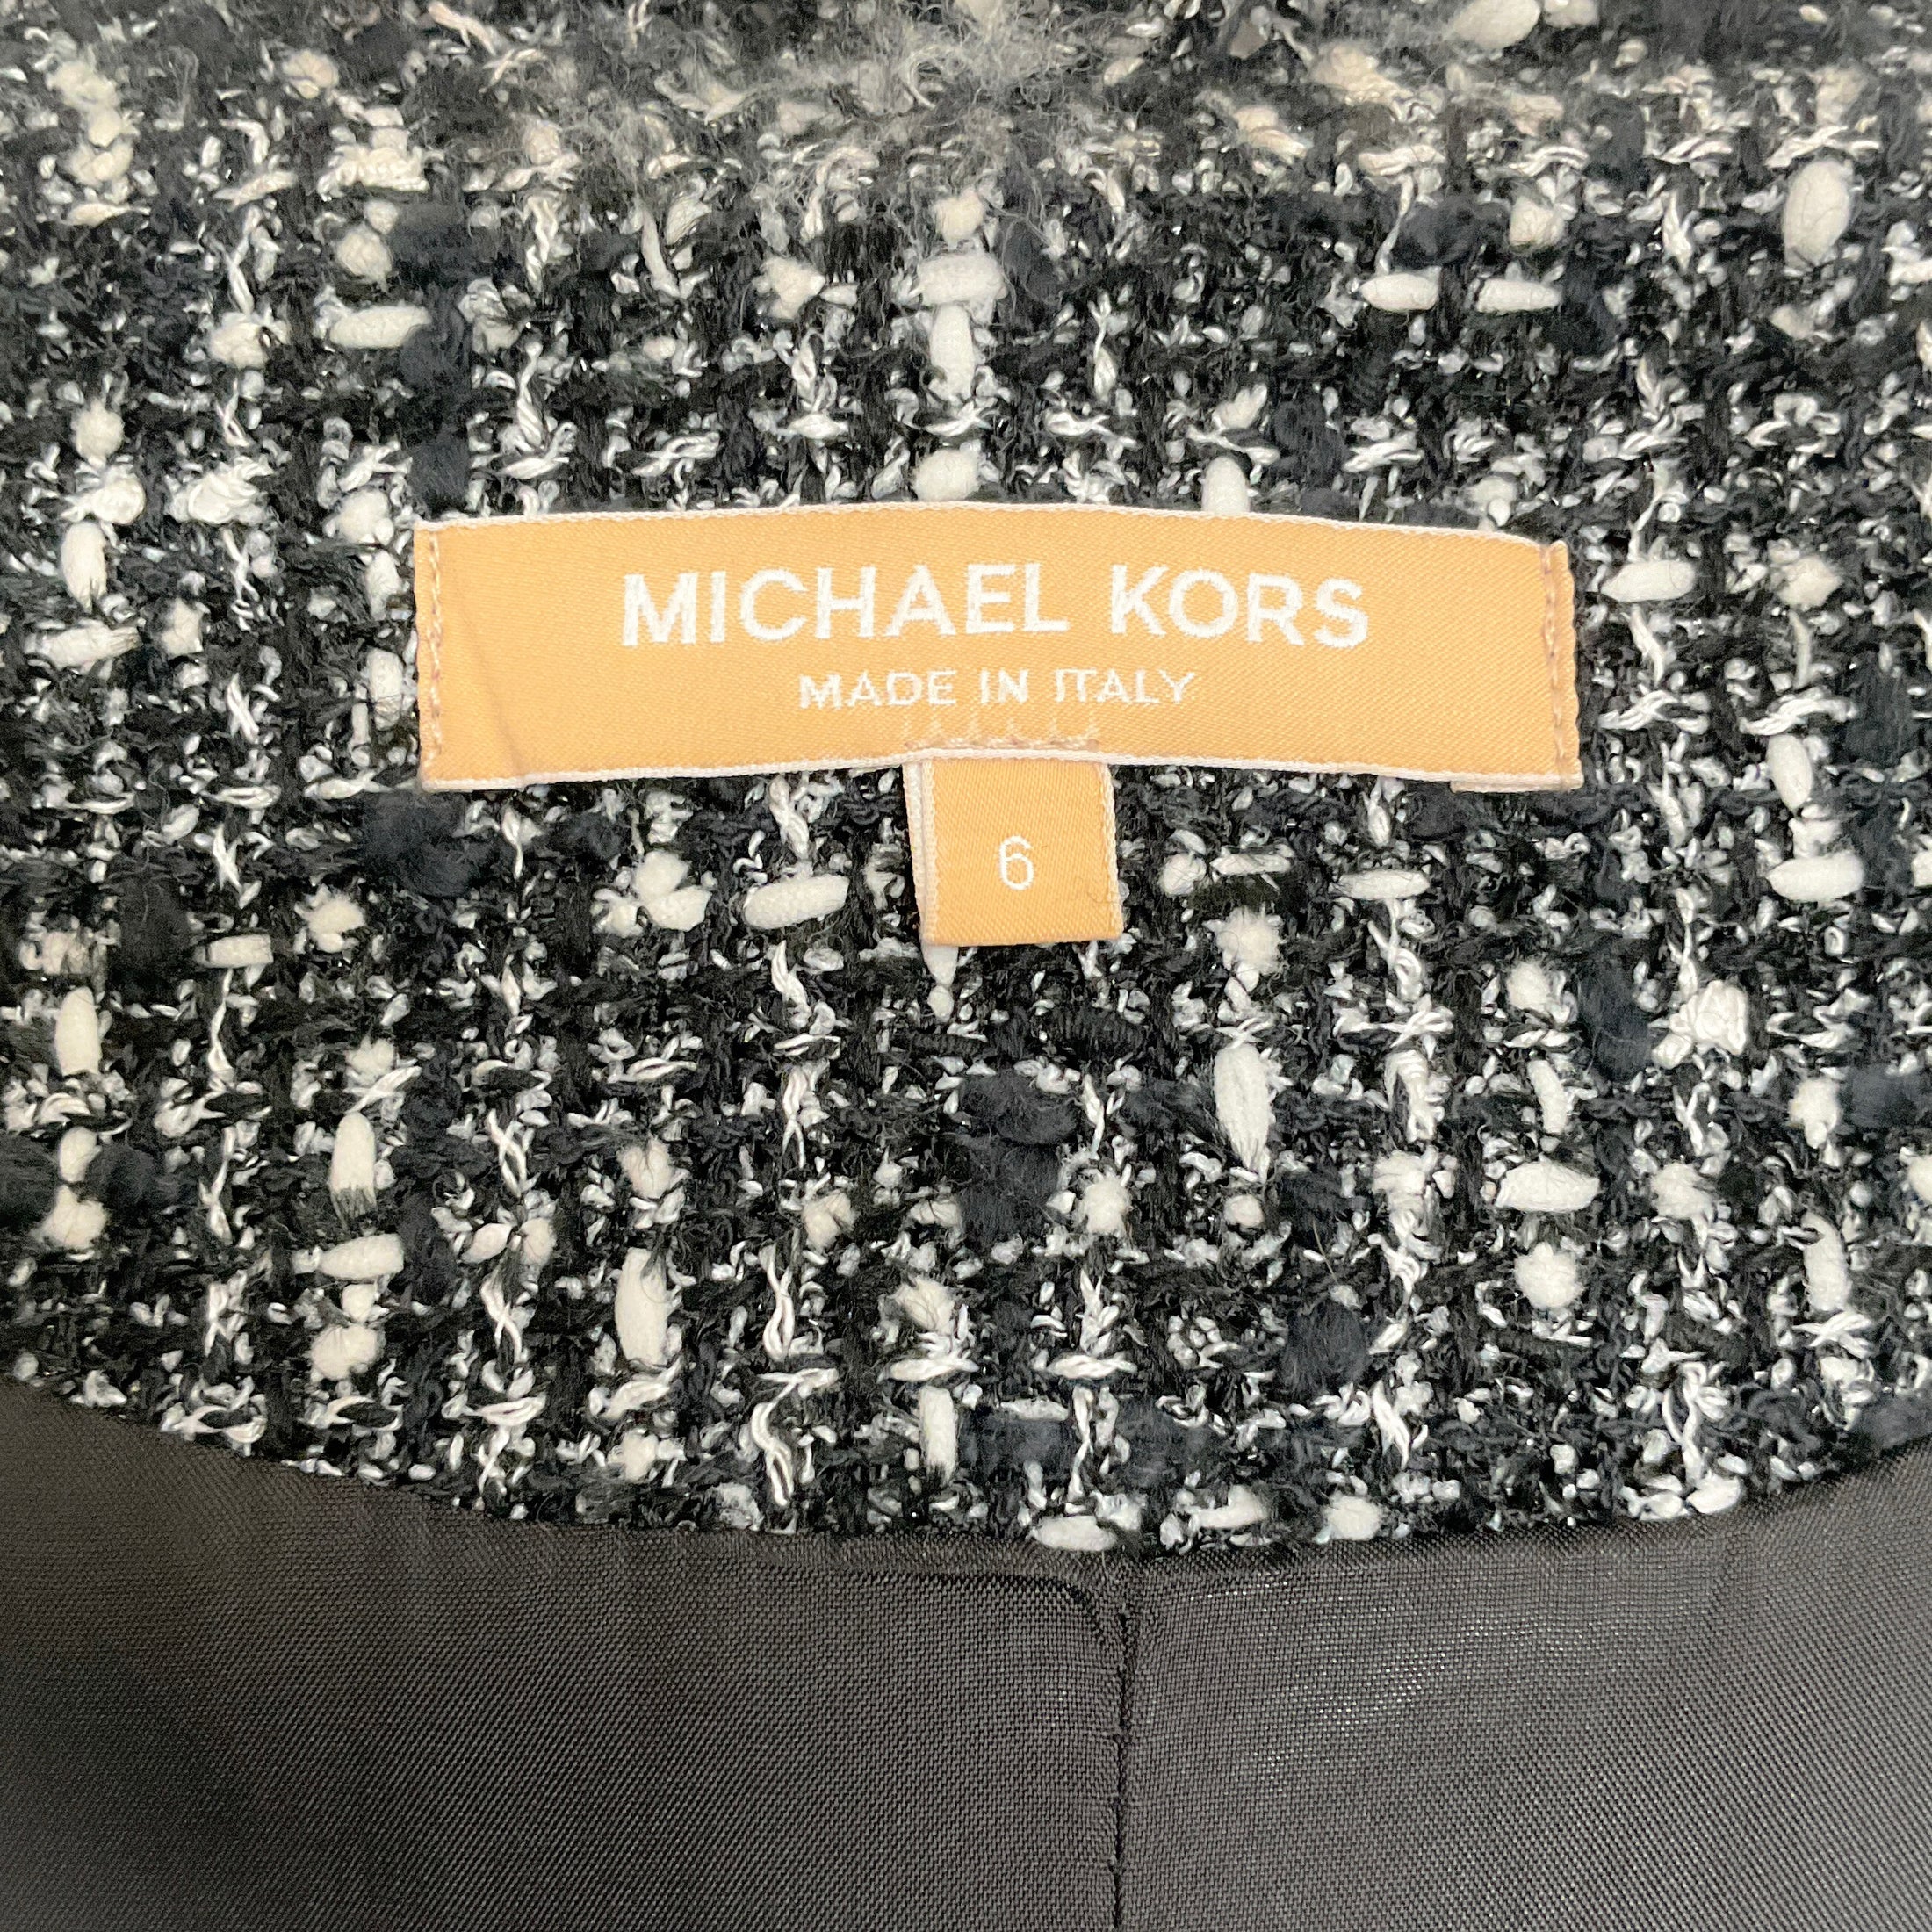 Michael Kors Black / White Tweed Jacket